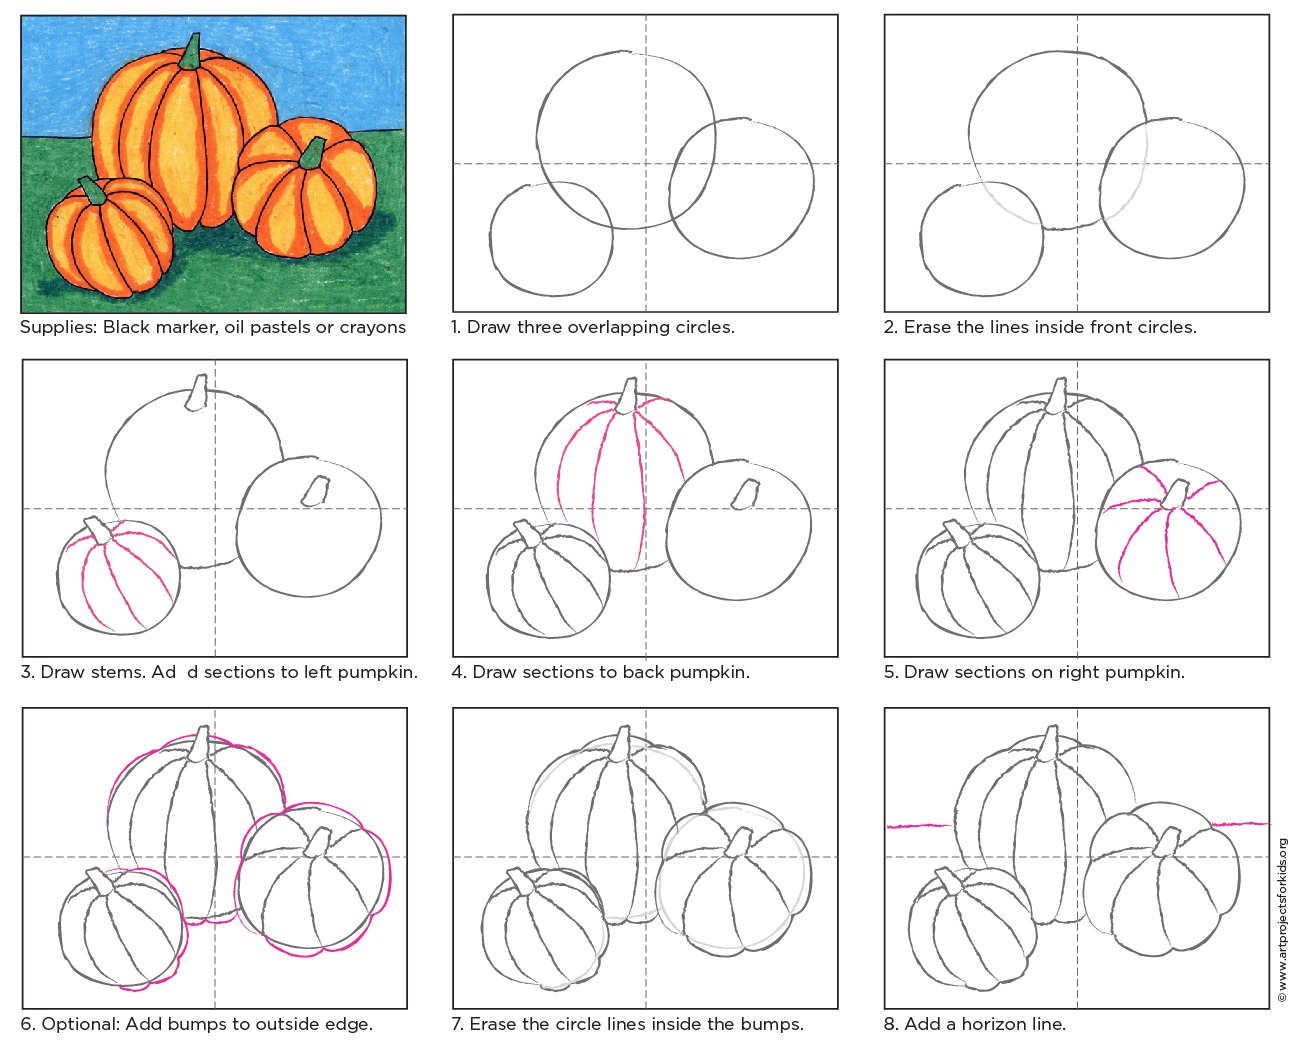 Pumpkin Drawing Art Projects for Kids